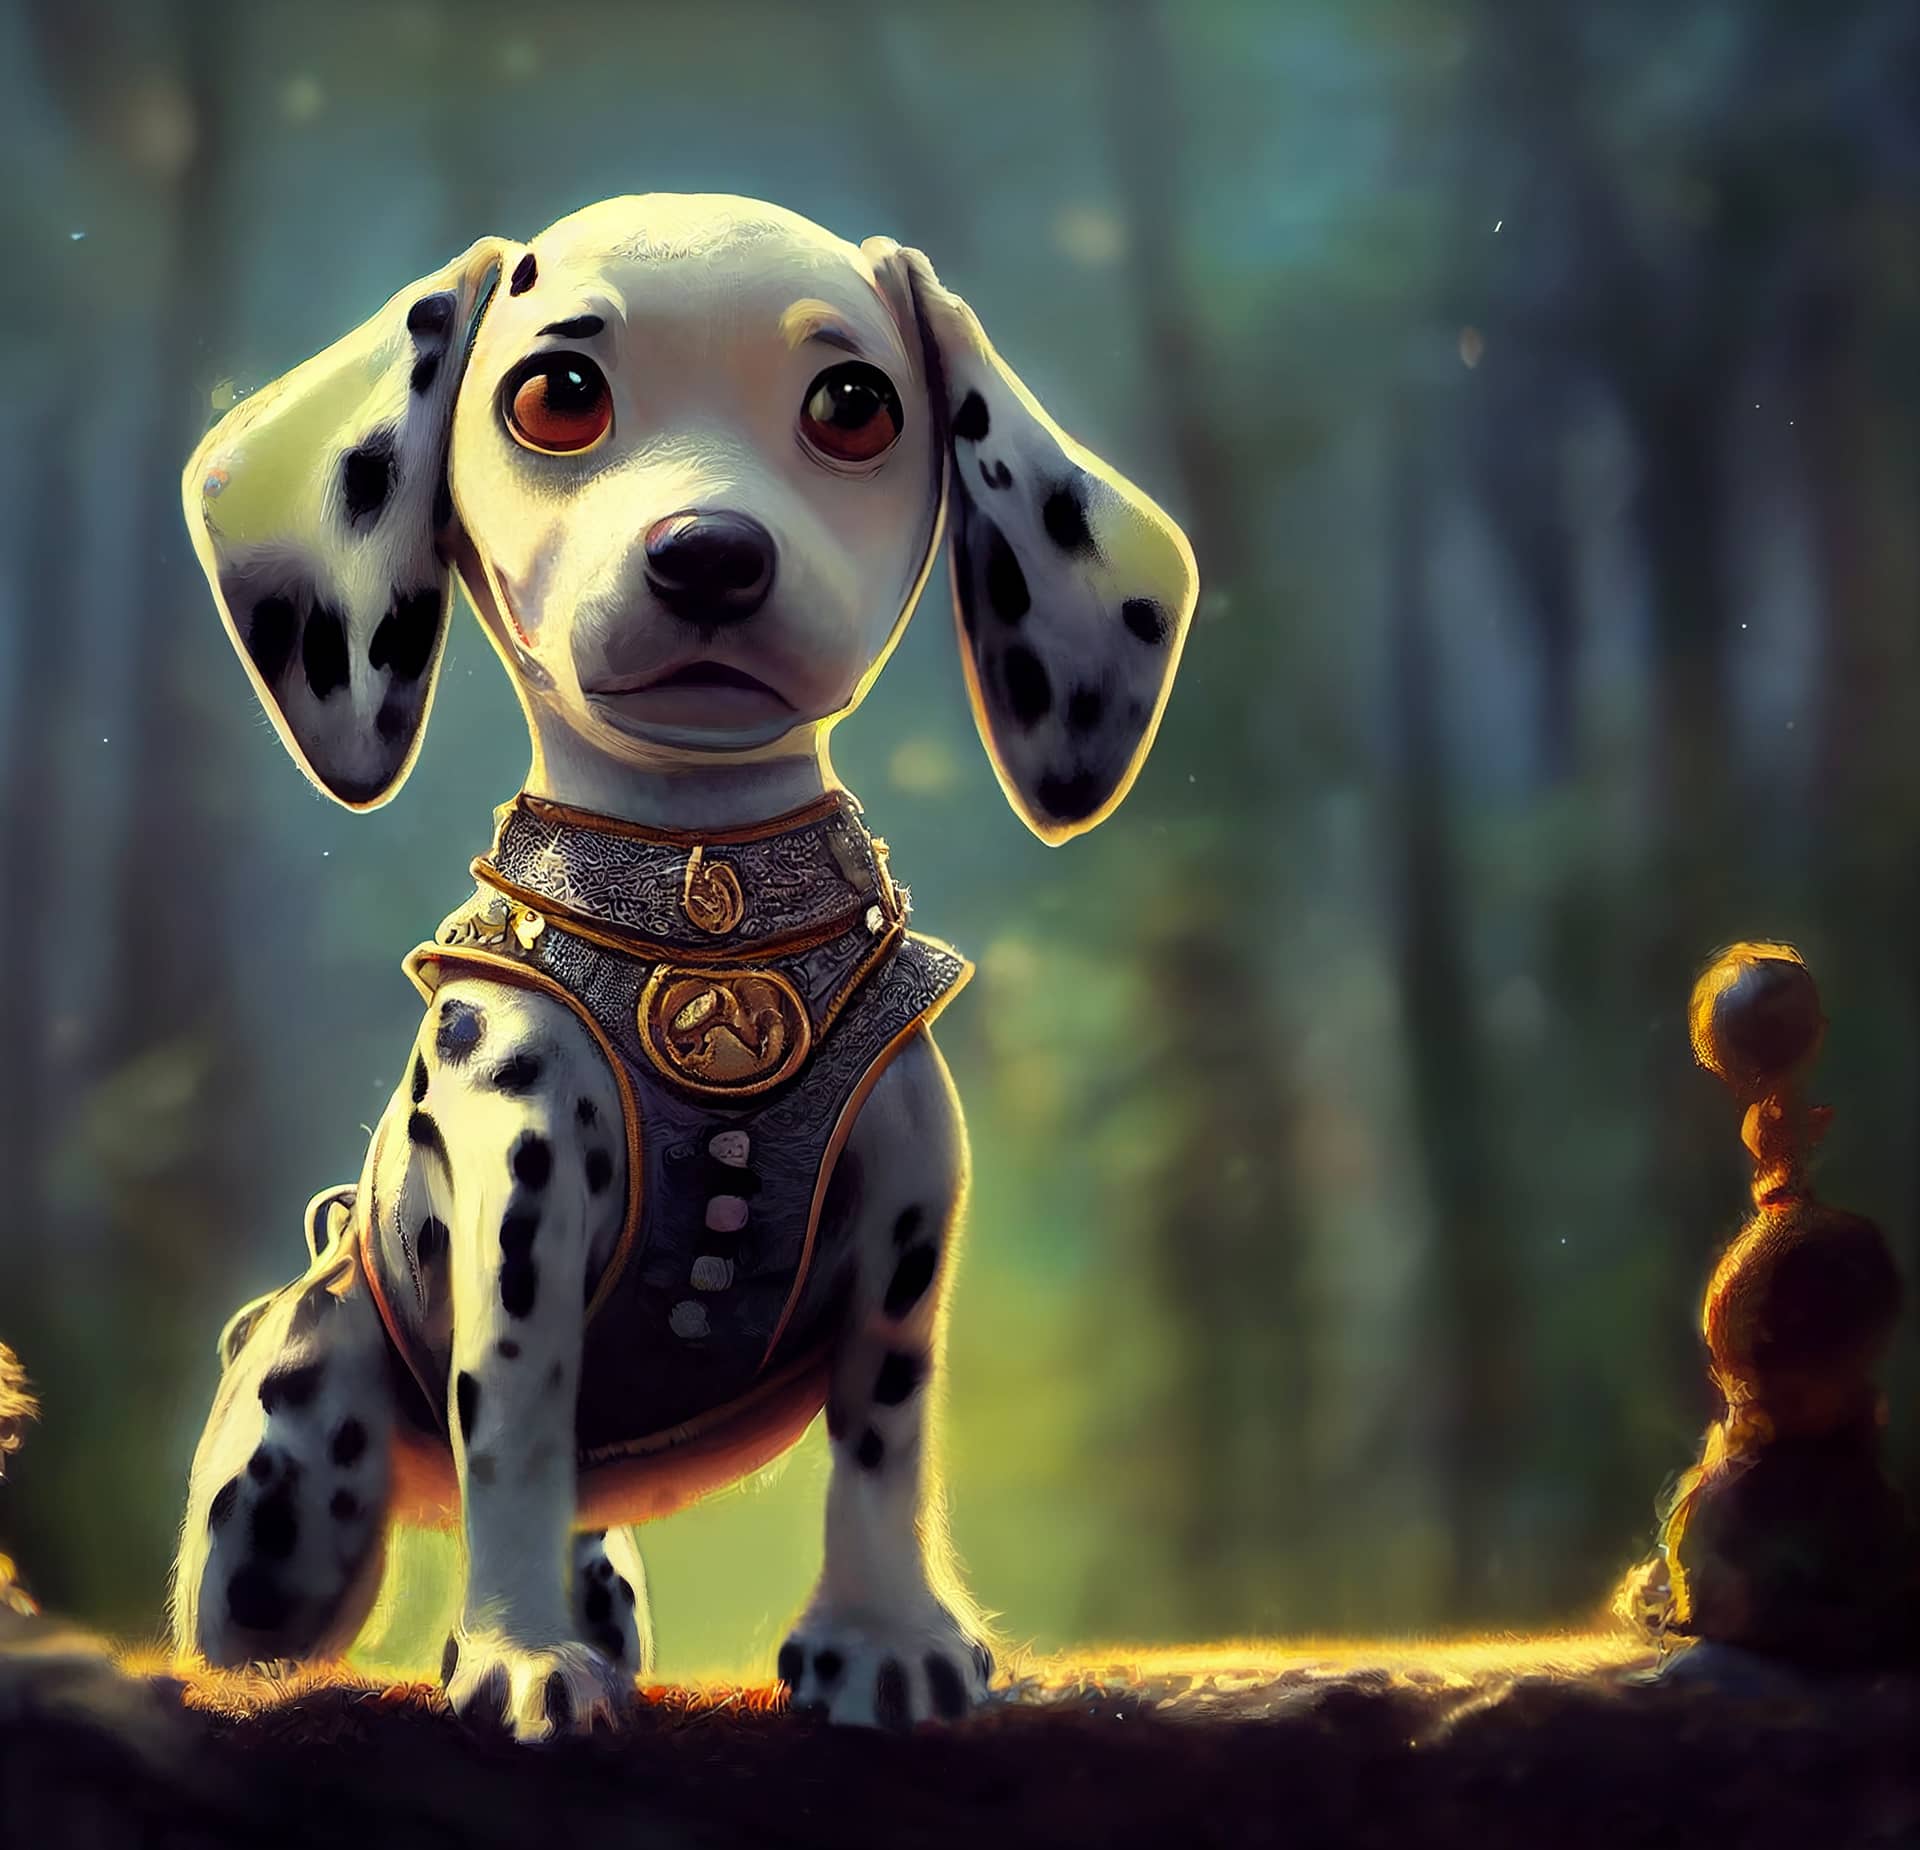 Adorable tiny dalmatian puppy as cartoon adventurer